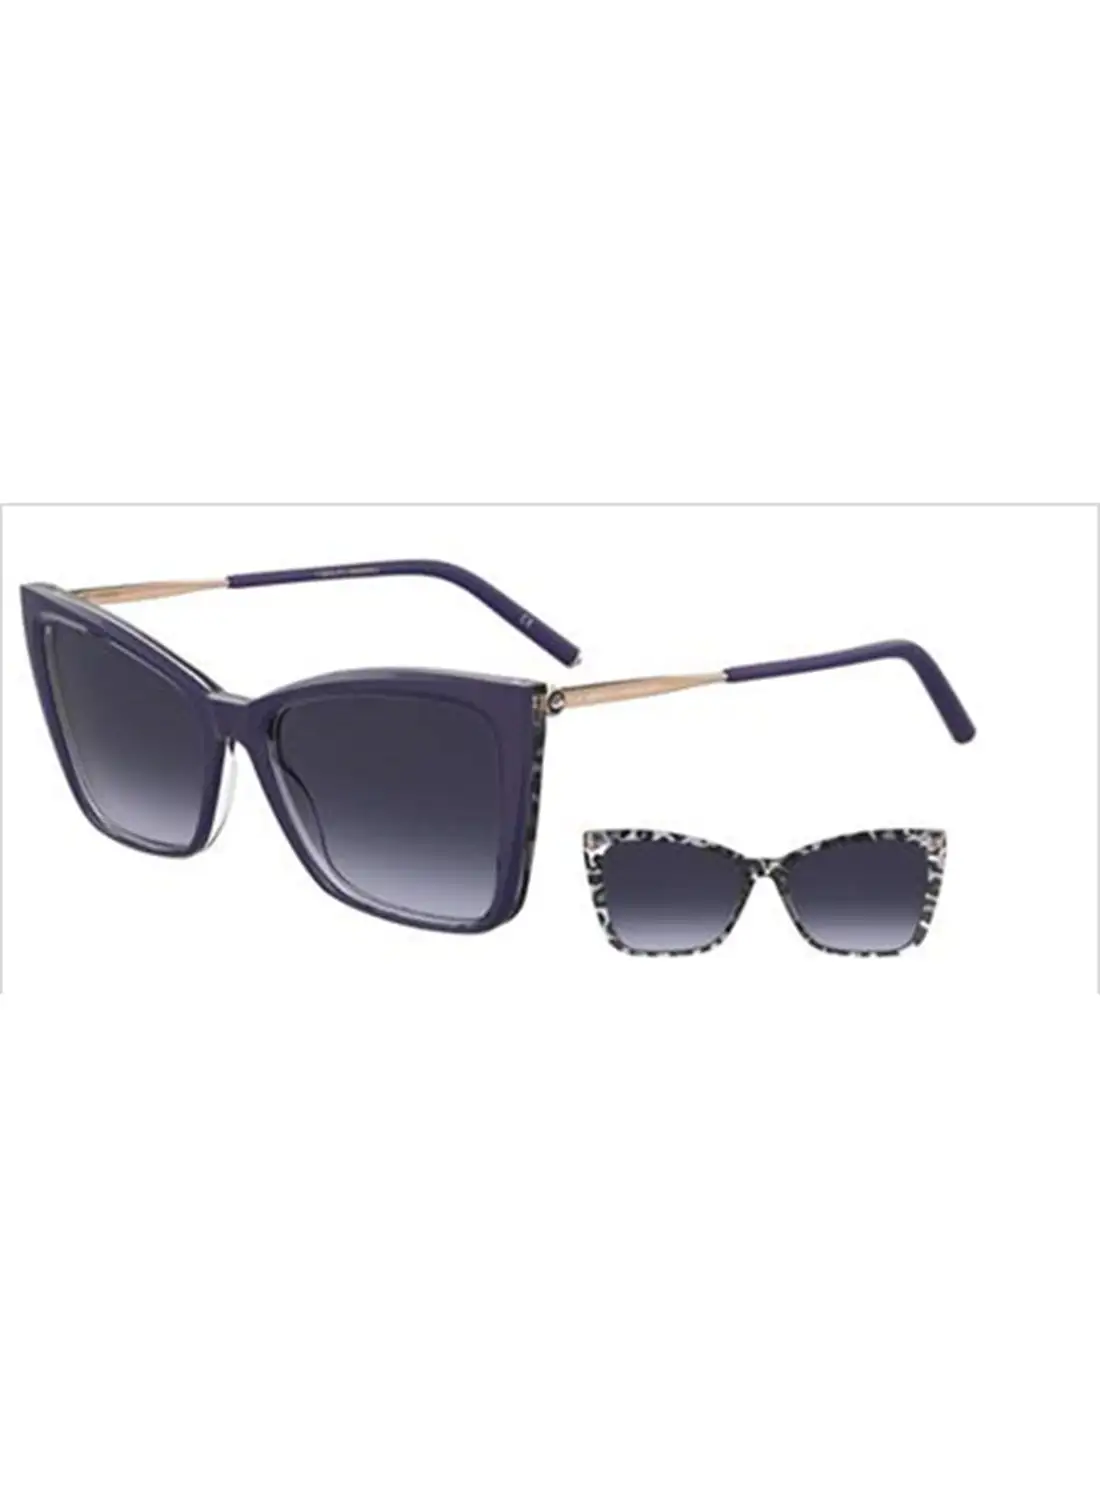 CAROLINA HERRERA Women's UV Protection Rectangular Sunglasses - Her 0180/S Blue 17 - Lens Size: 45.3 Mm